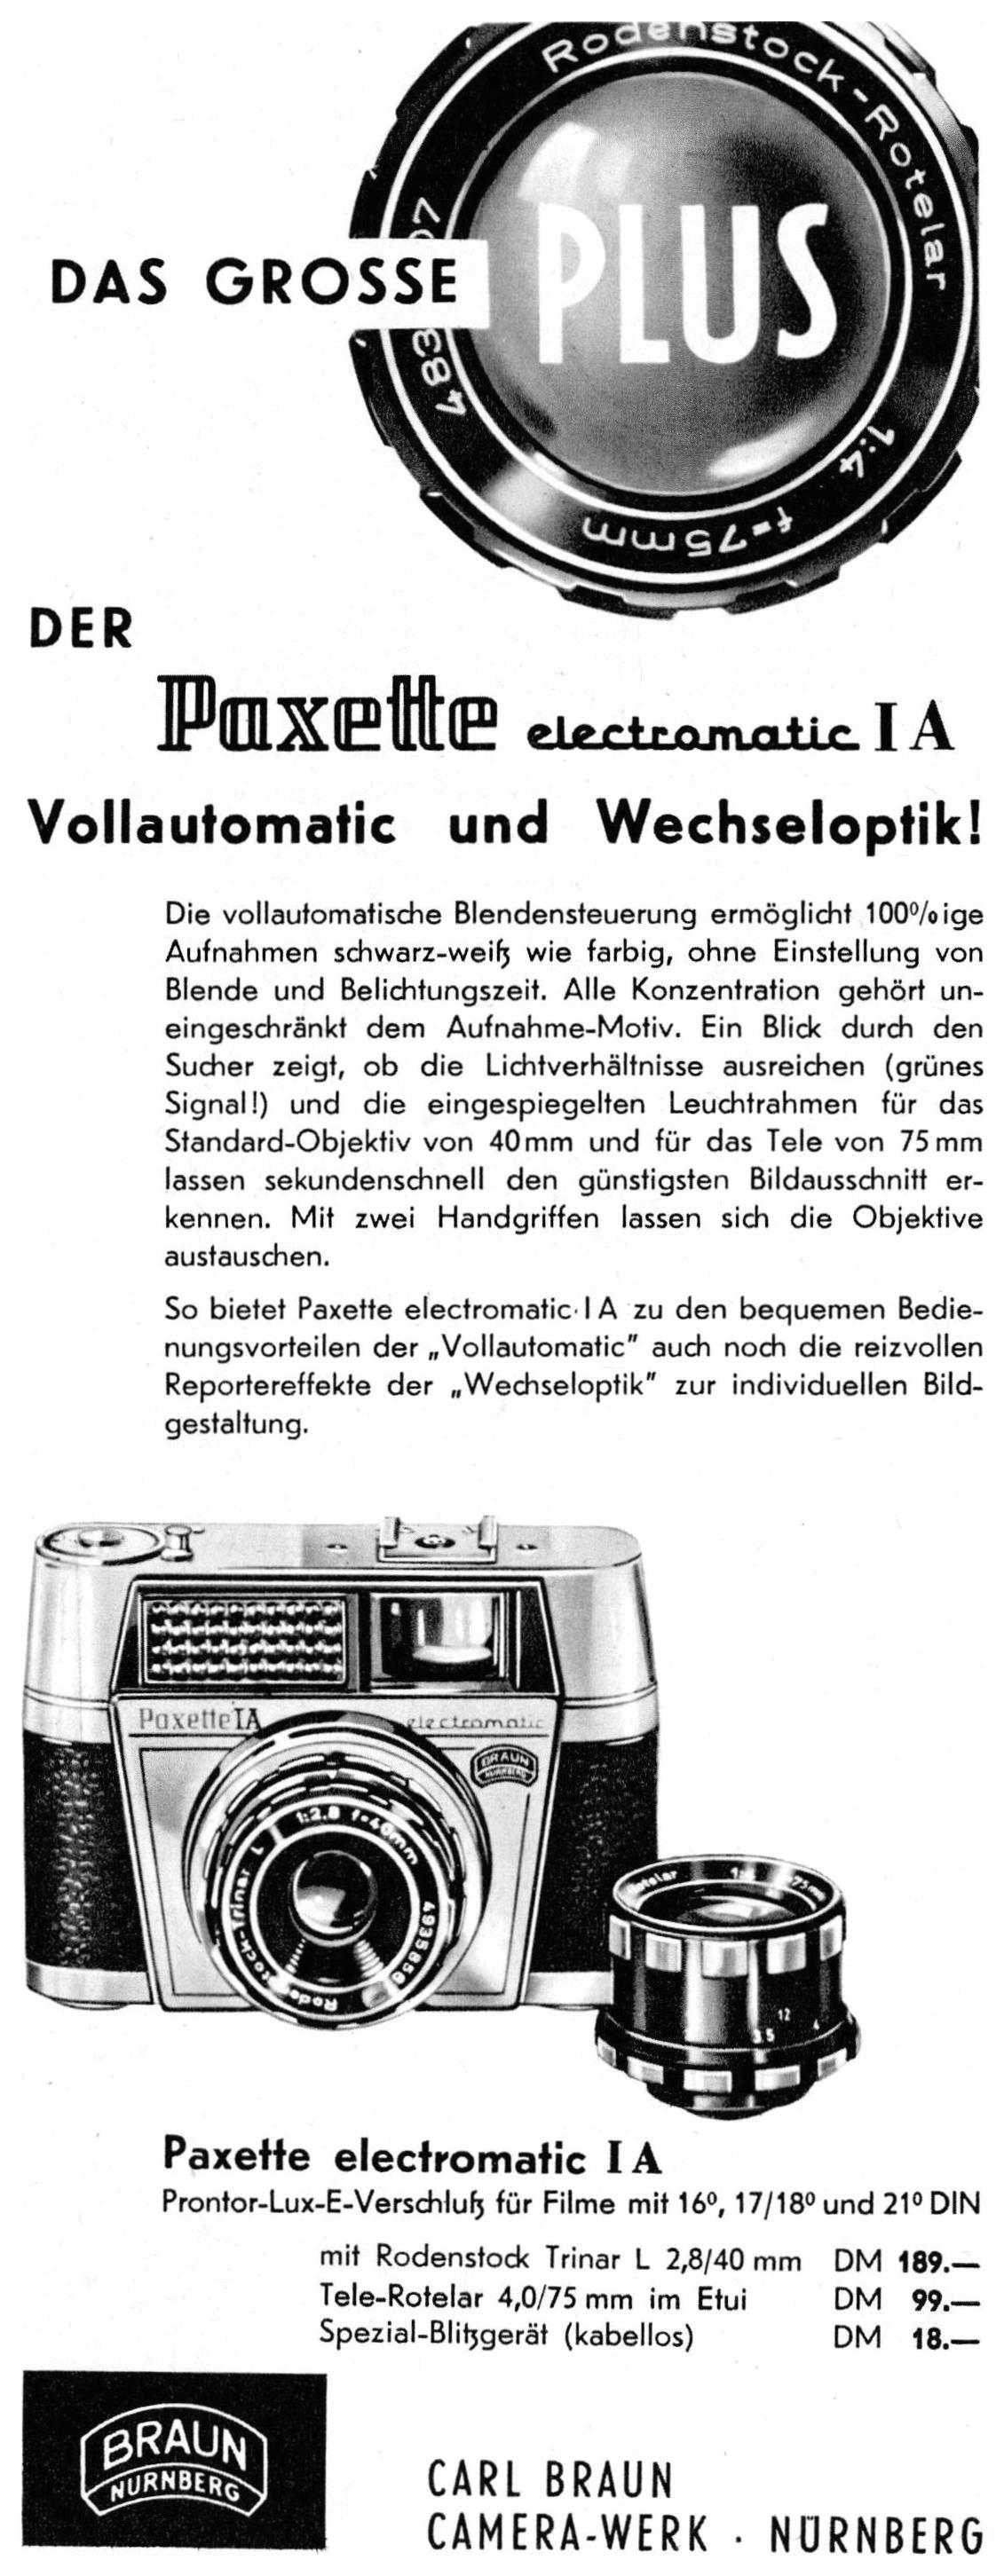 Braun Nuernberg 1962 0.jpg